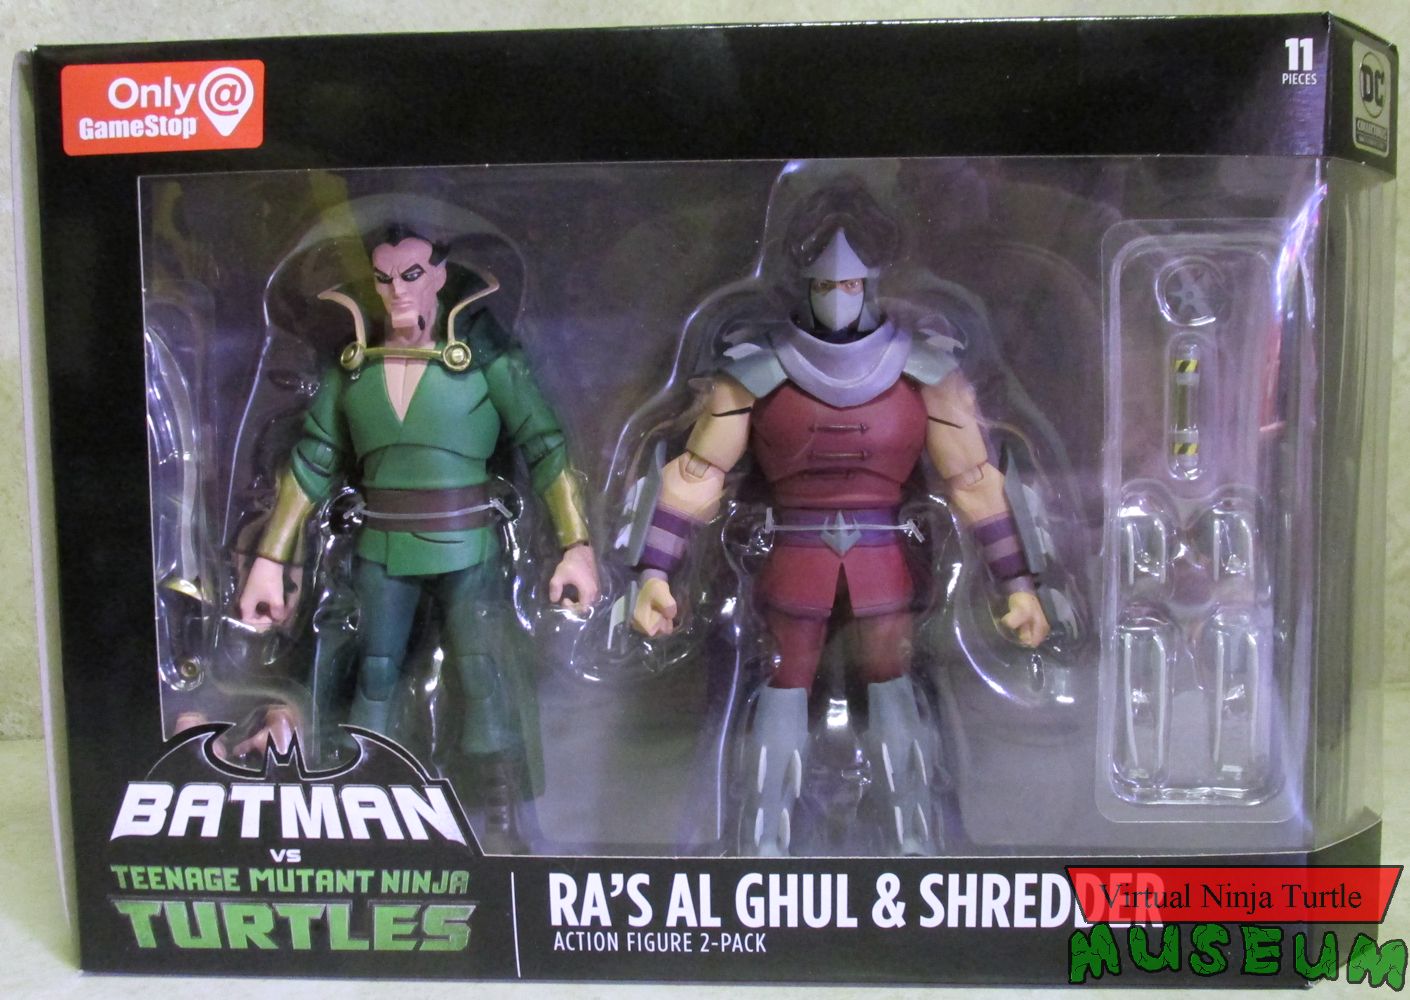 Ra's Al Ghul & Shredder box front